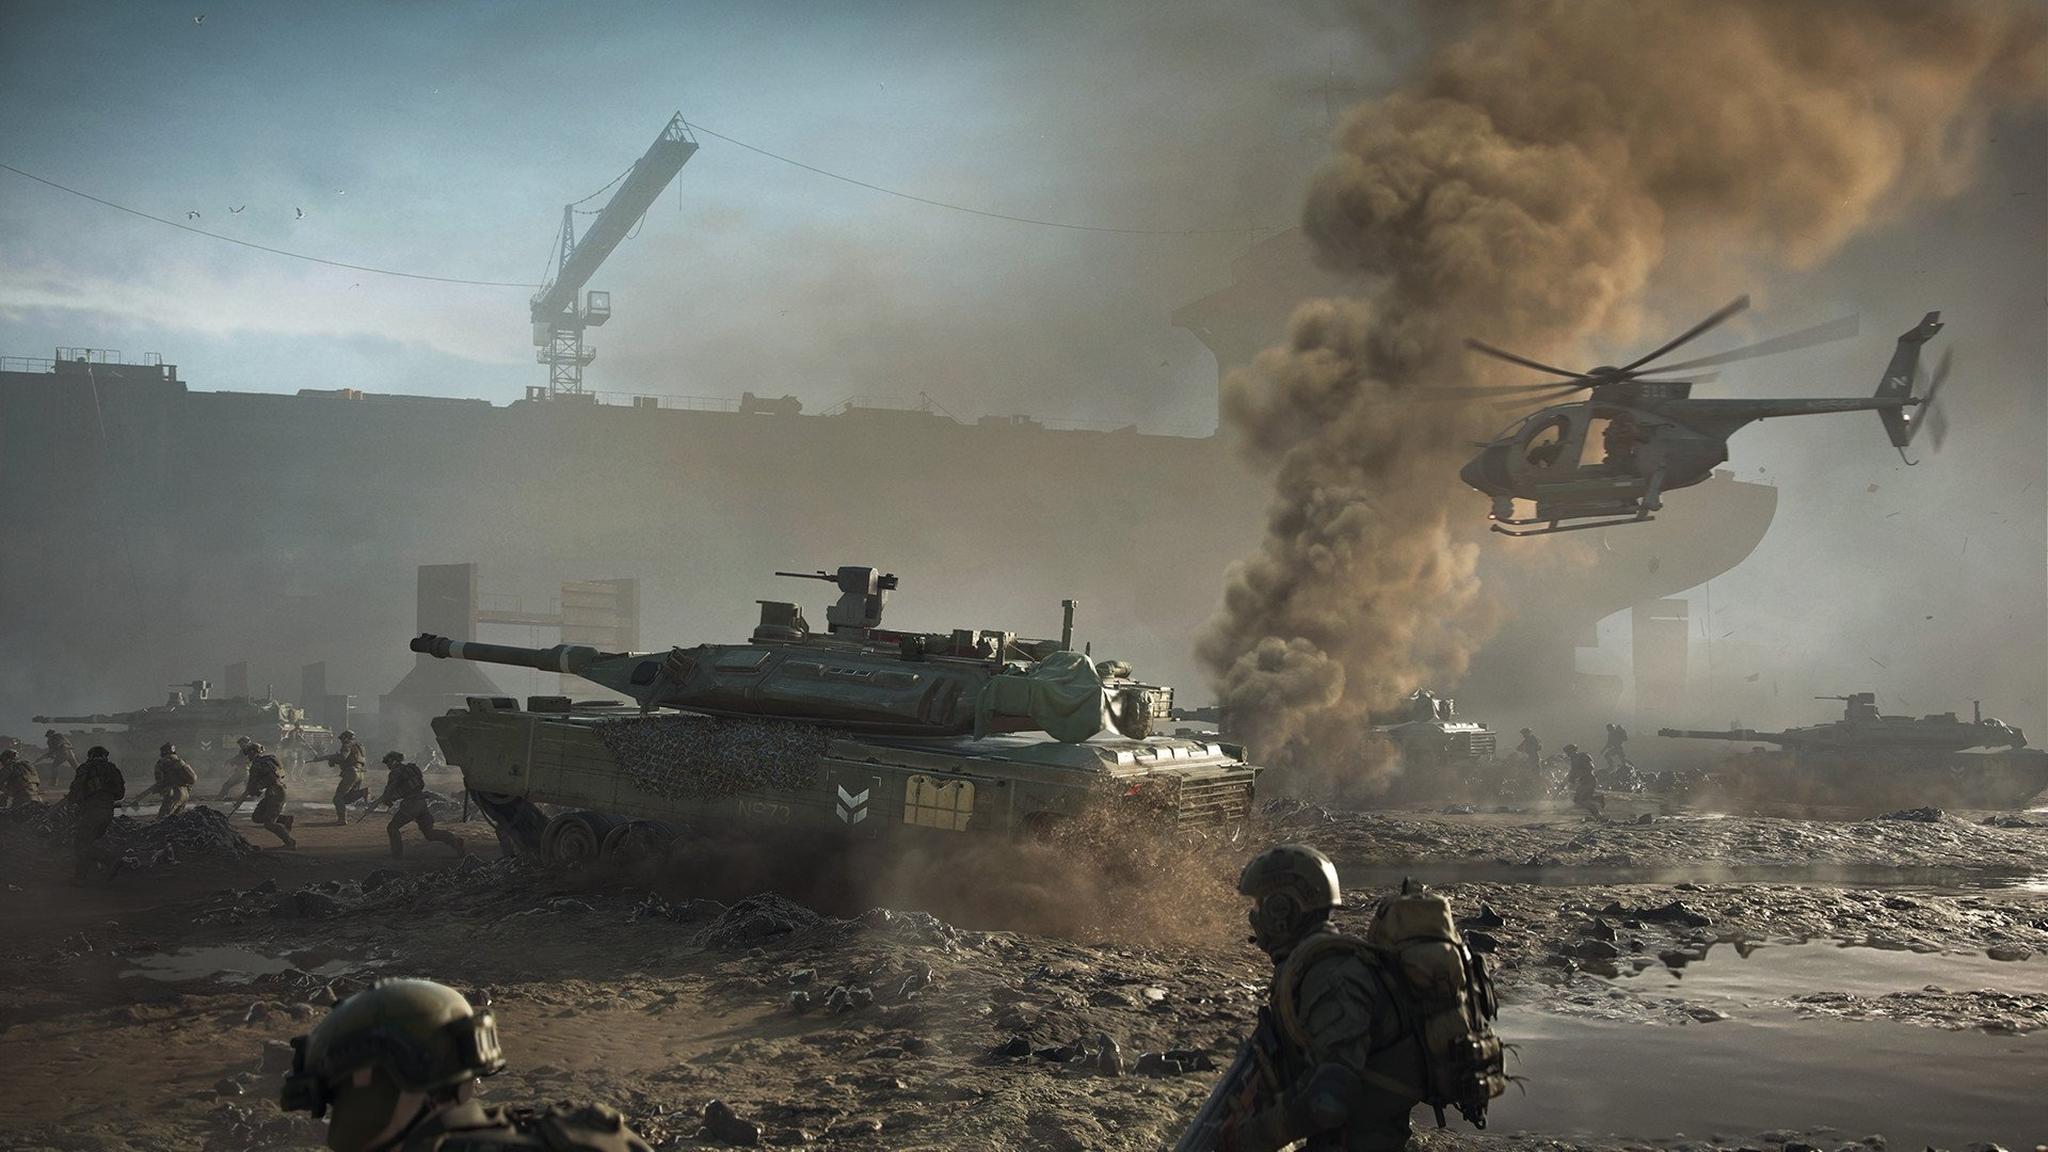 Battlefield 2042 - Xbox One Game